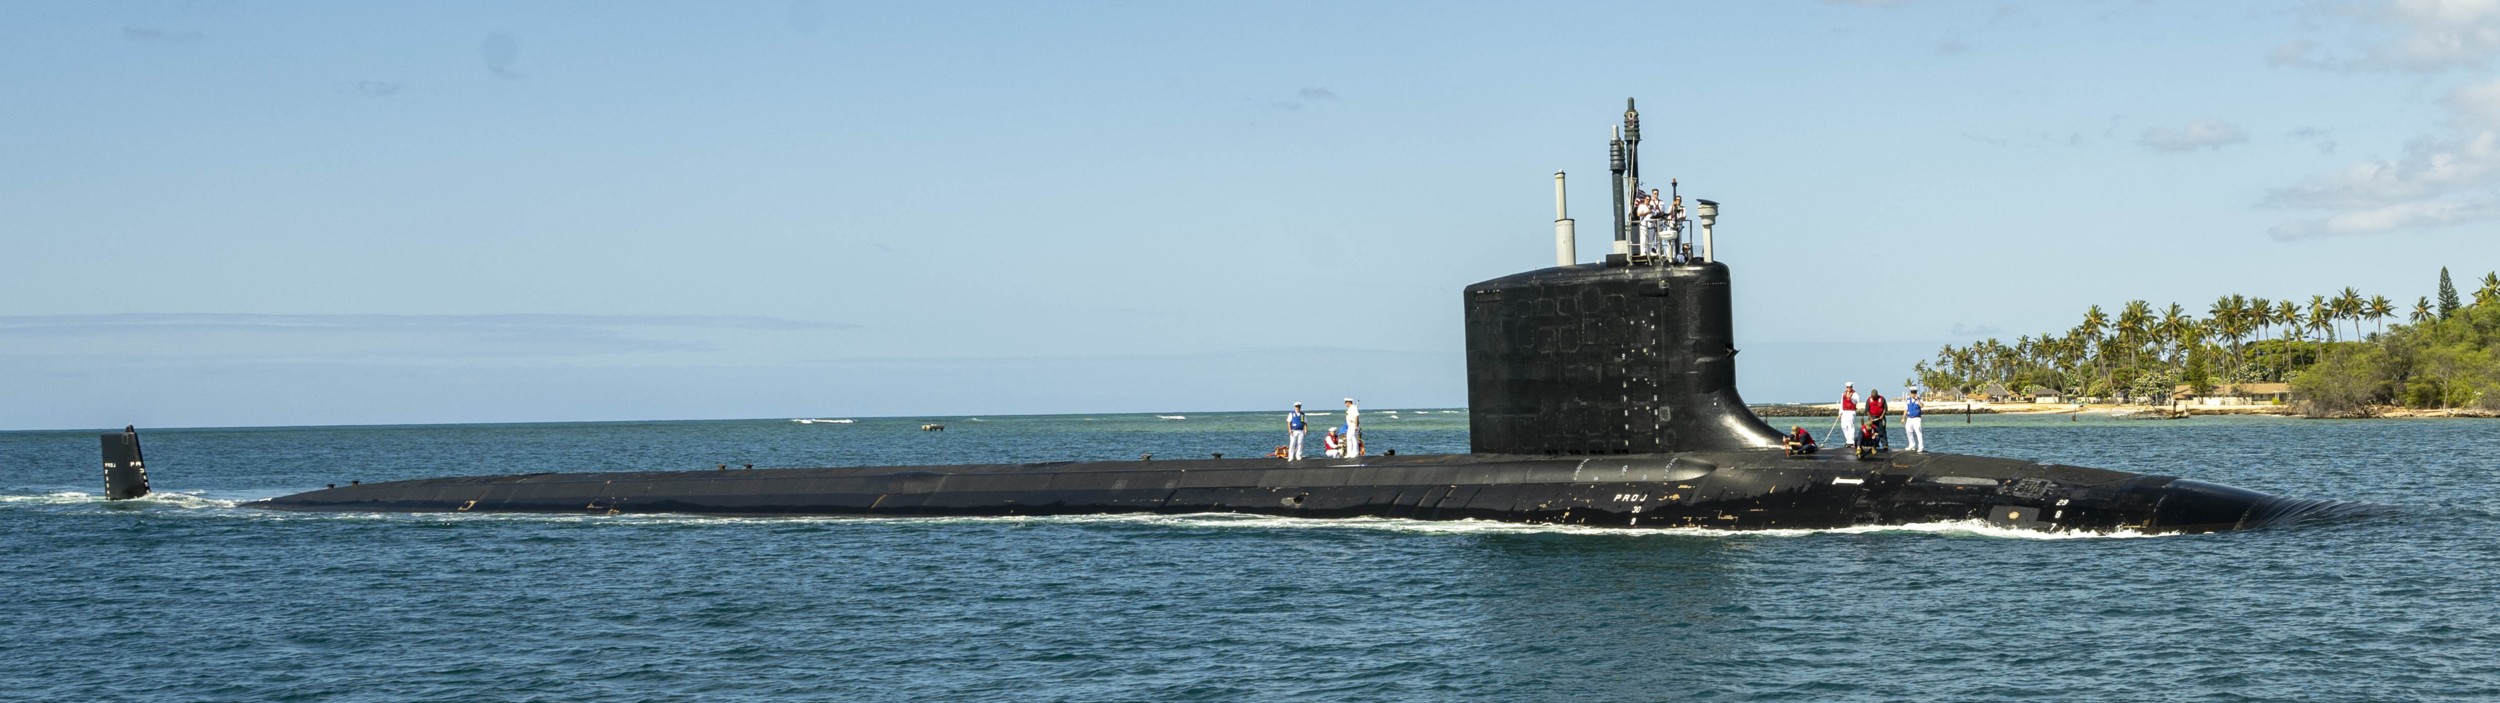 ssn-792 uss vermont virginia class attack submarine us navy arriving homeport pearl harbor hickam hawaii 22